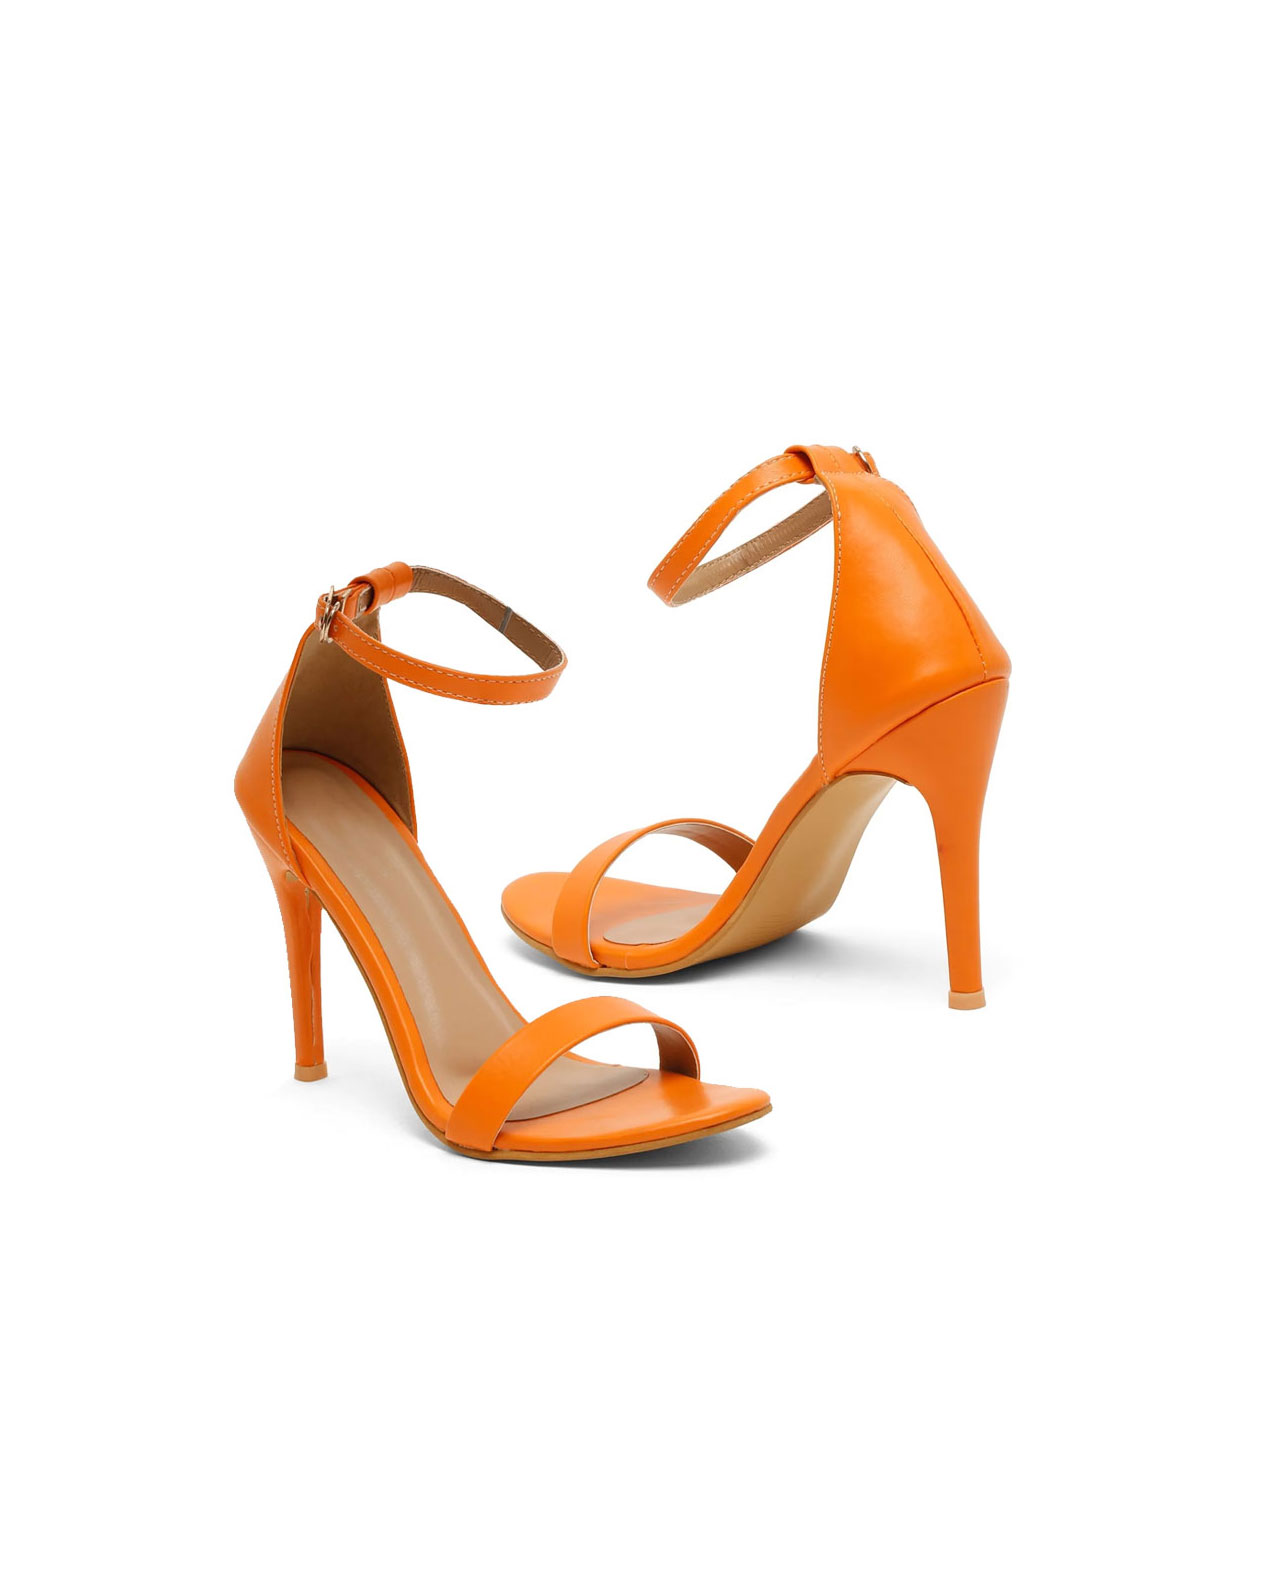 Orange Patent Leather Shoes | Orange Patent Shoes Heels | High Heels Orange  Leather - Pumps - Aliexpress